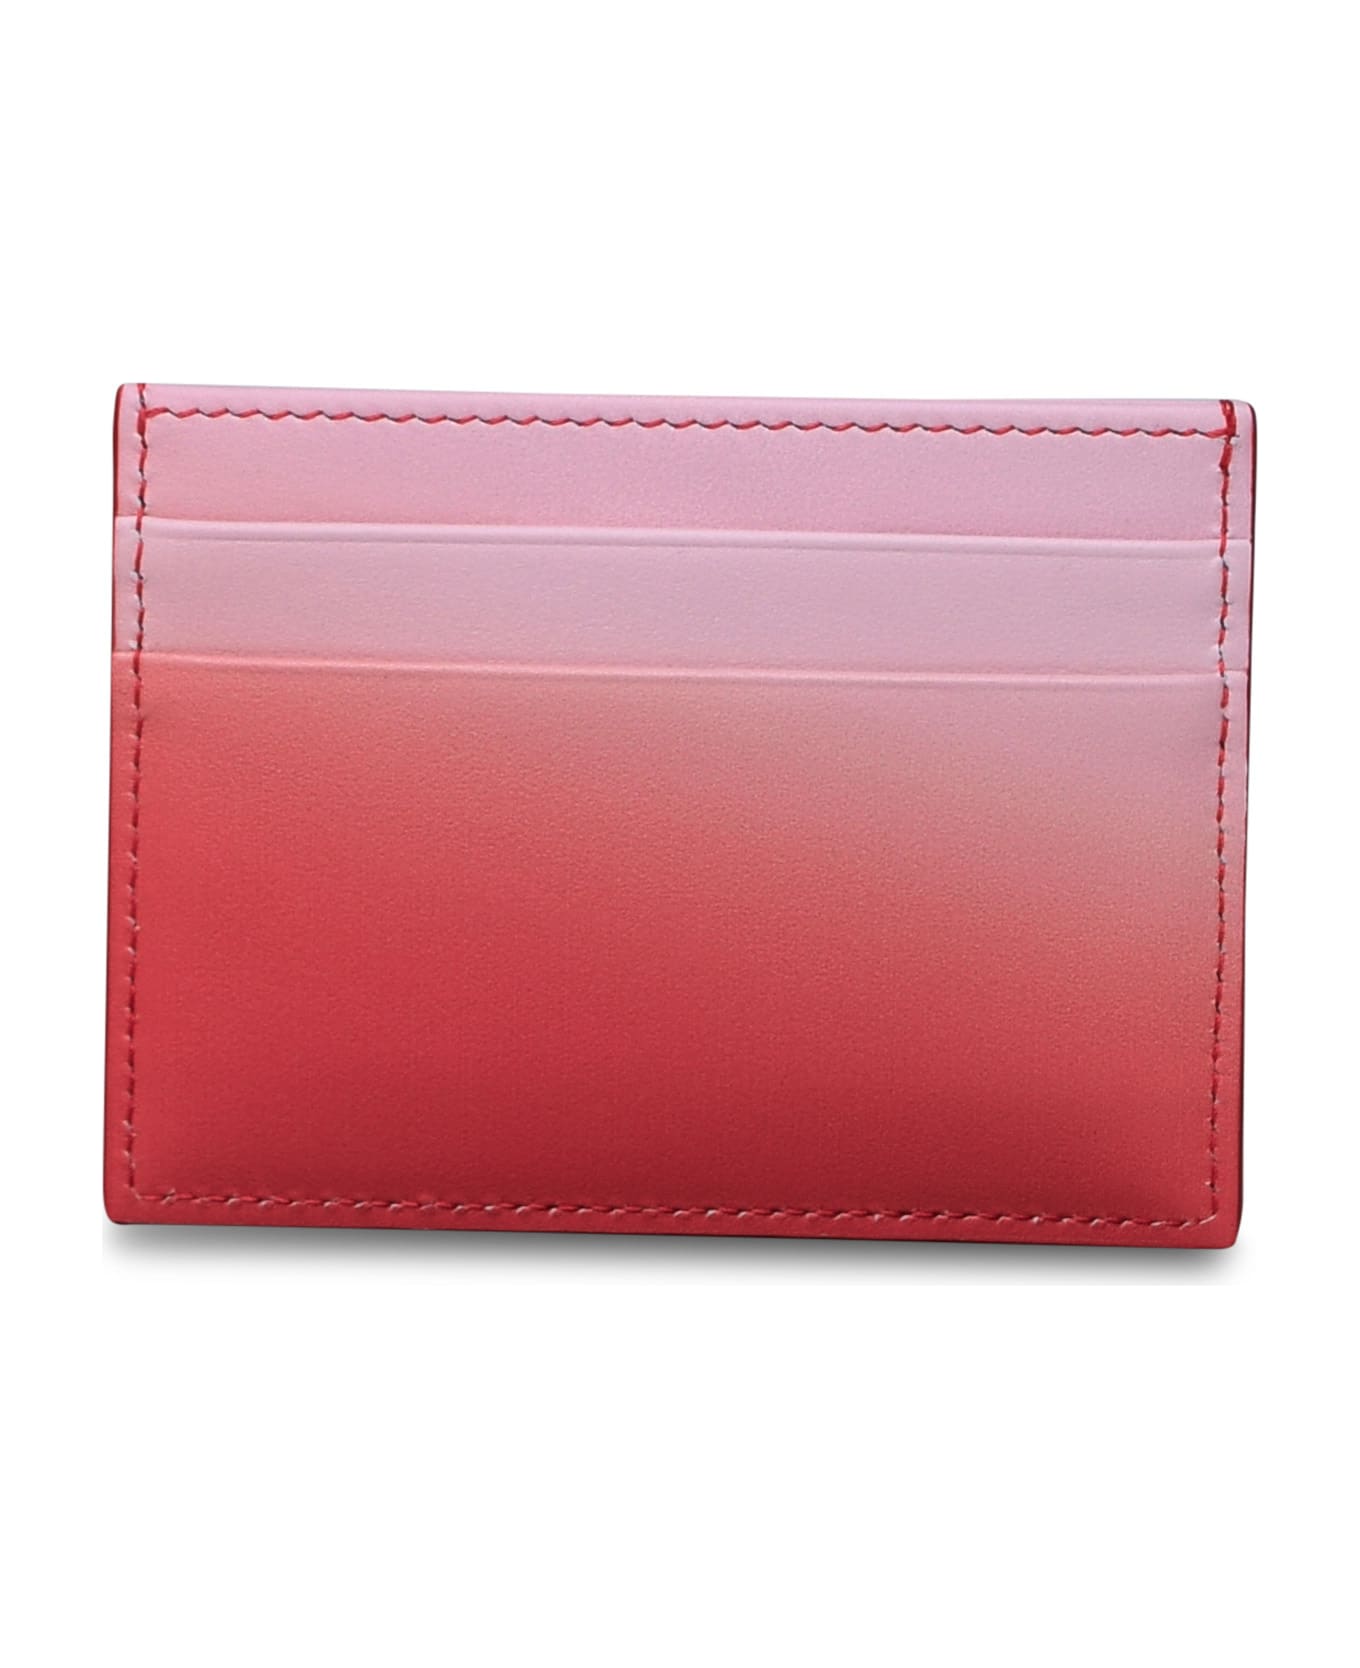 Dolce & Gabbana Leather Card Holder - PINK 財布